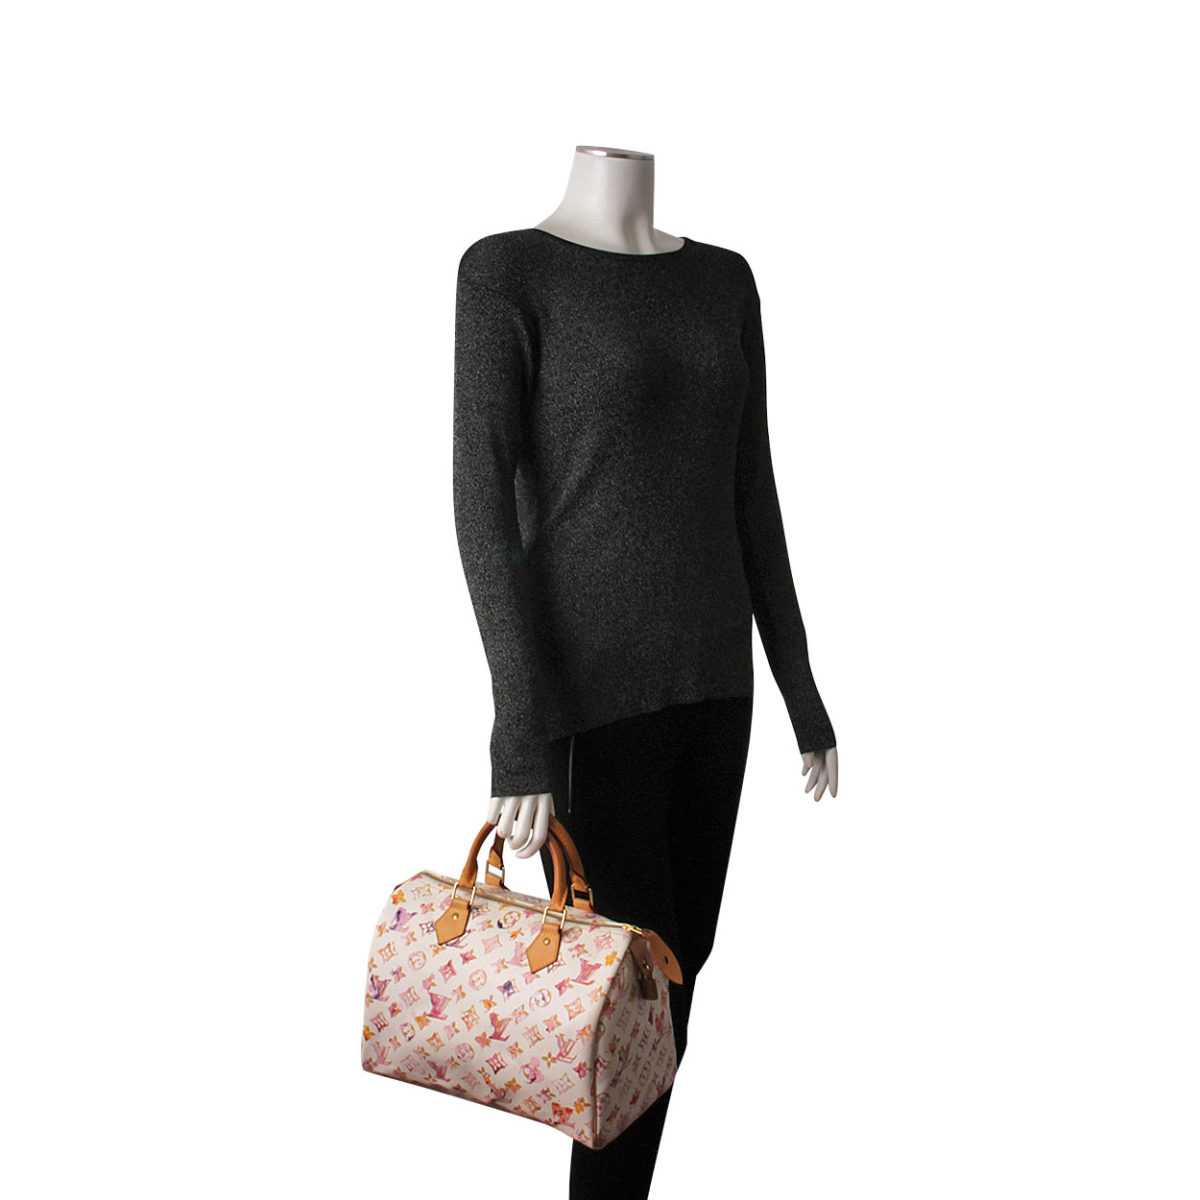 Louis Vuitton Richard Prince Speedy 35 Satchel Bag Multicolor